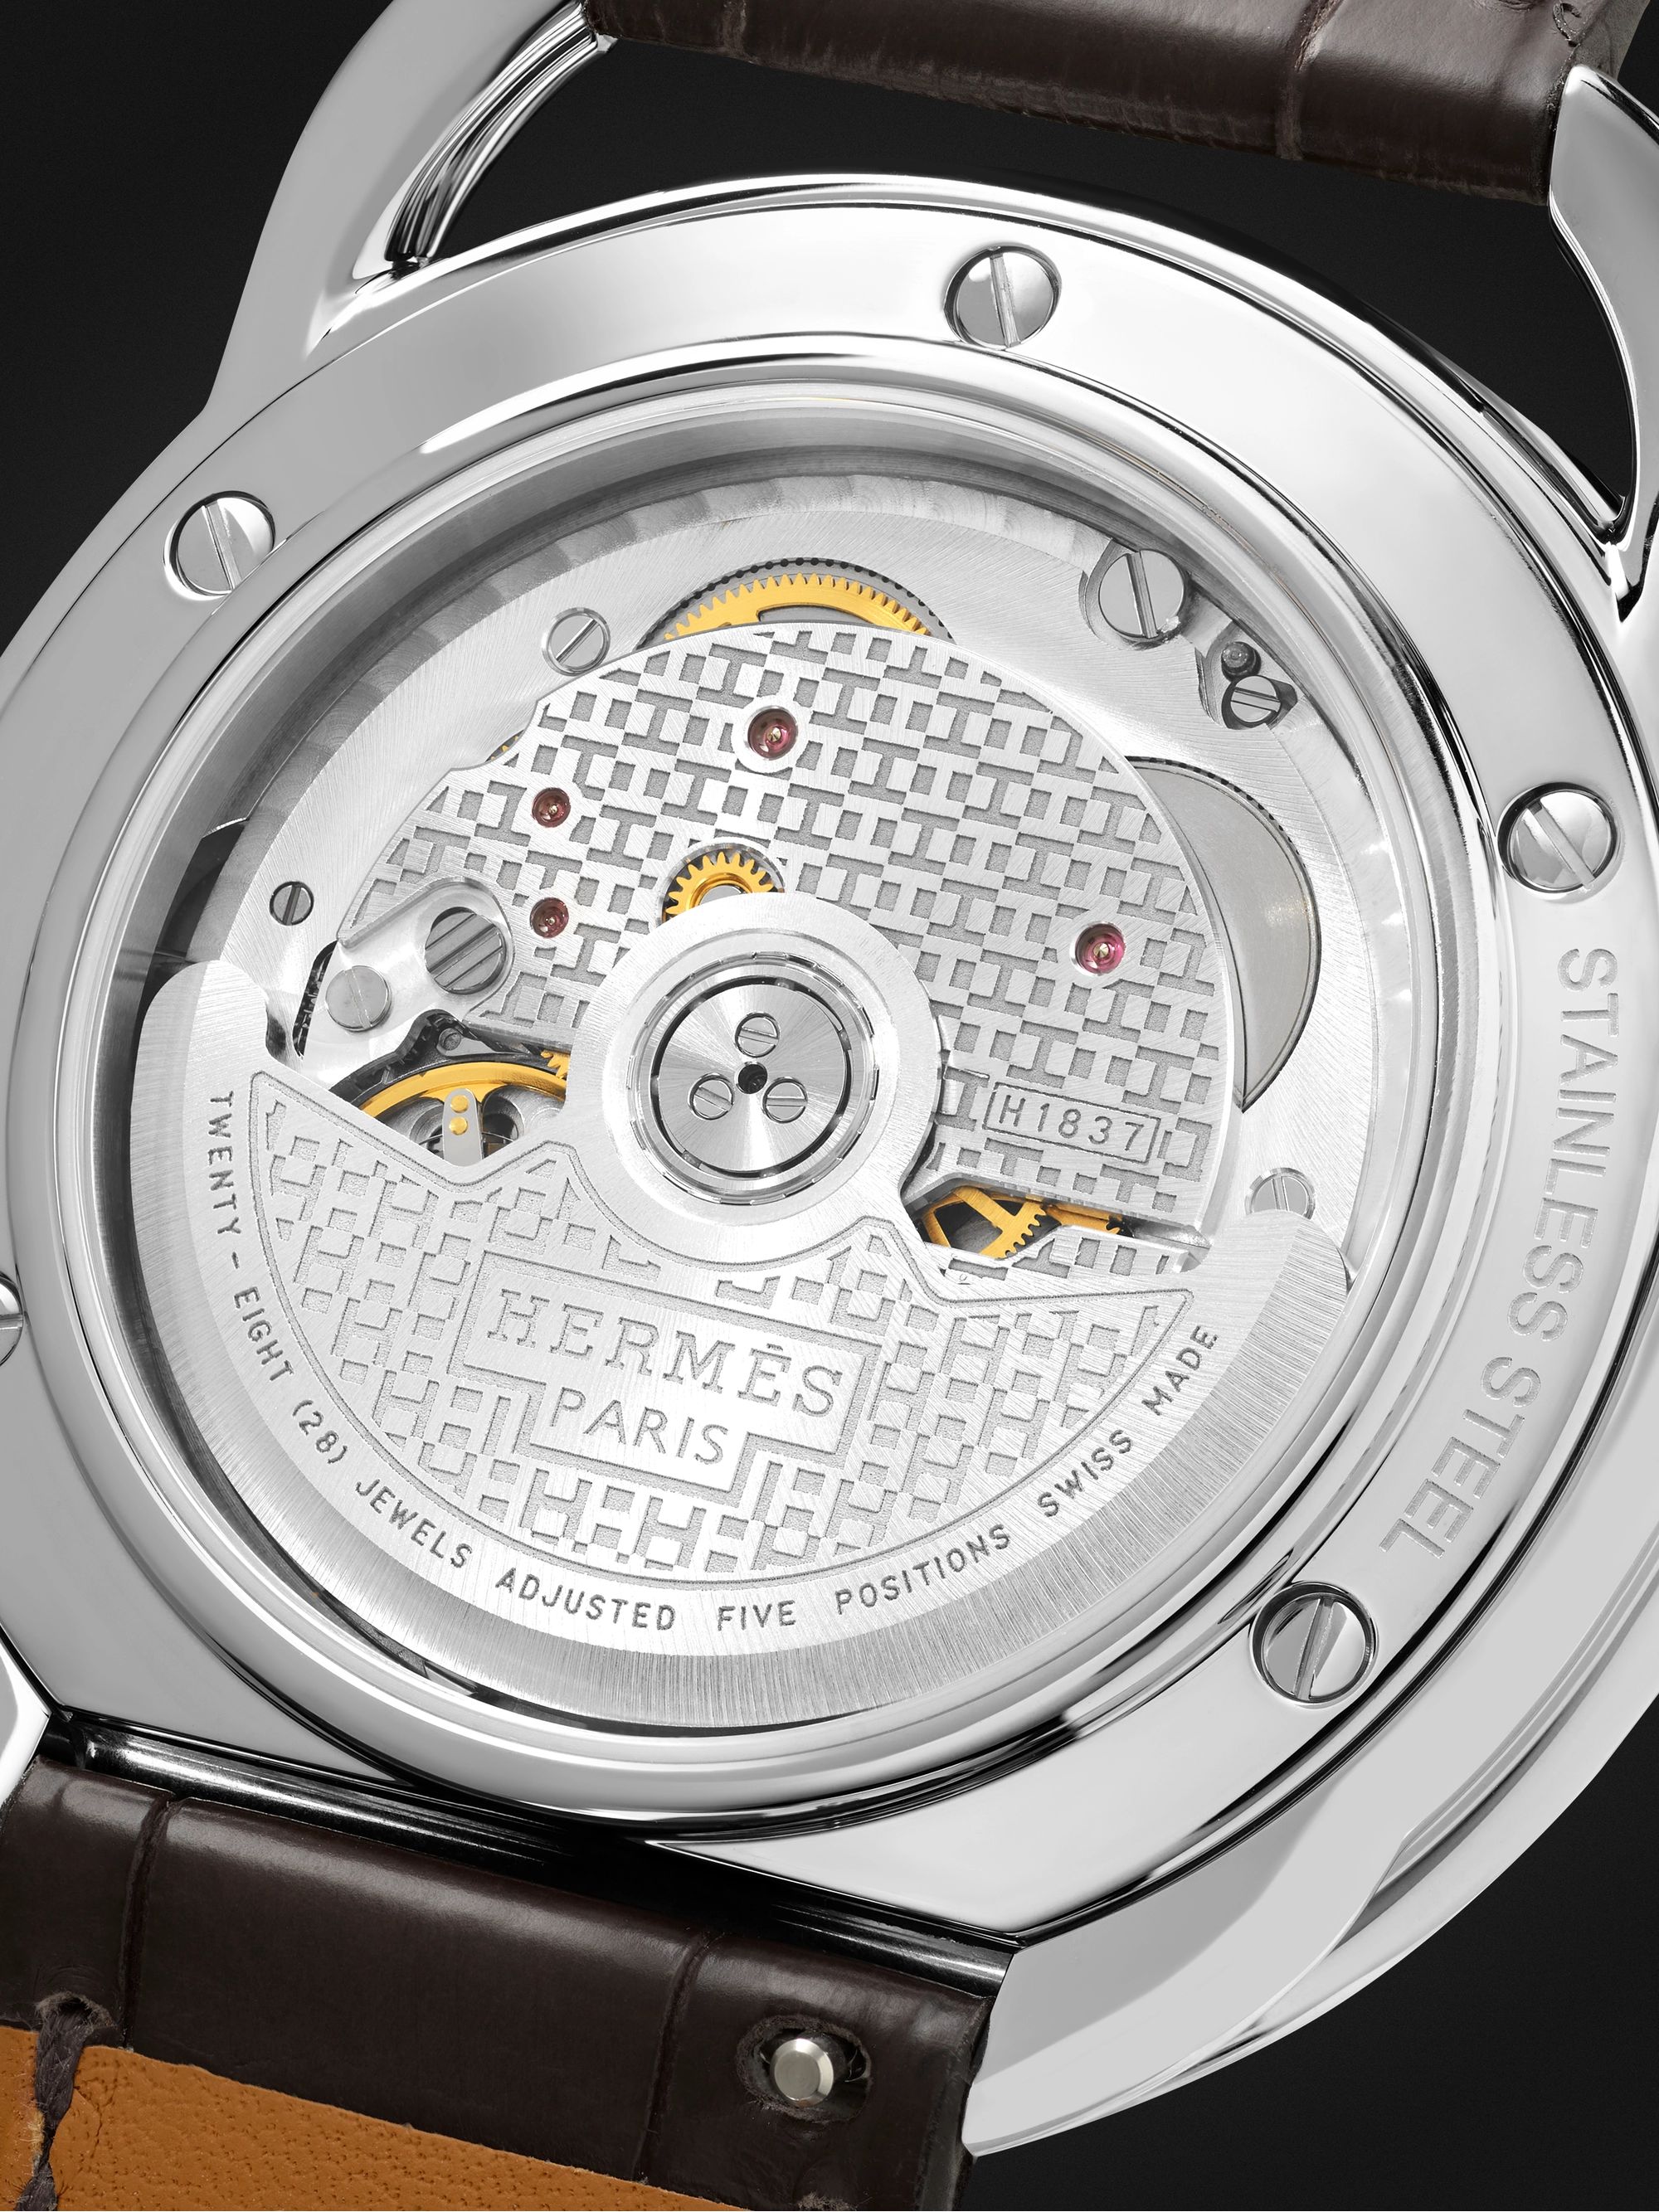 HERMÈS TIMEPIECES Arceau Automatic 40mm Steel and Alligator Watch, Ref. No. 055562WW00